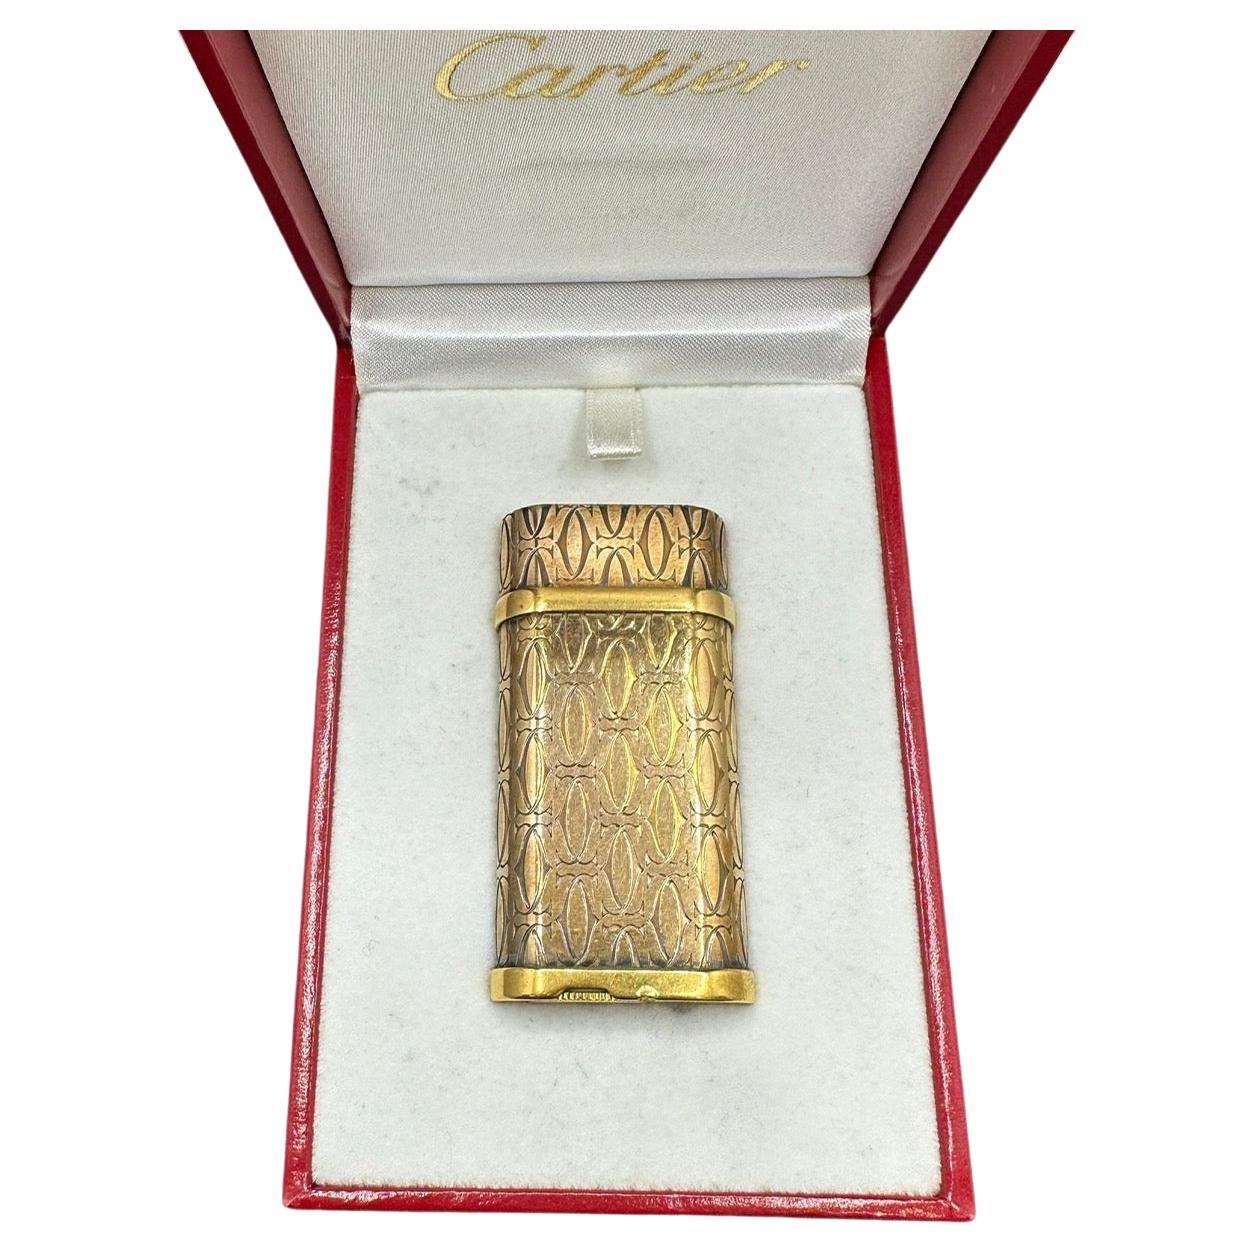 Le Must de Cartier Logo 18k Gold Plated Retro Rare Logo Lighter